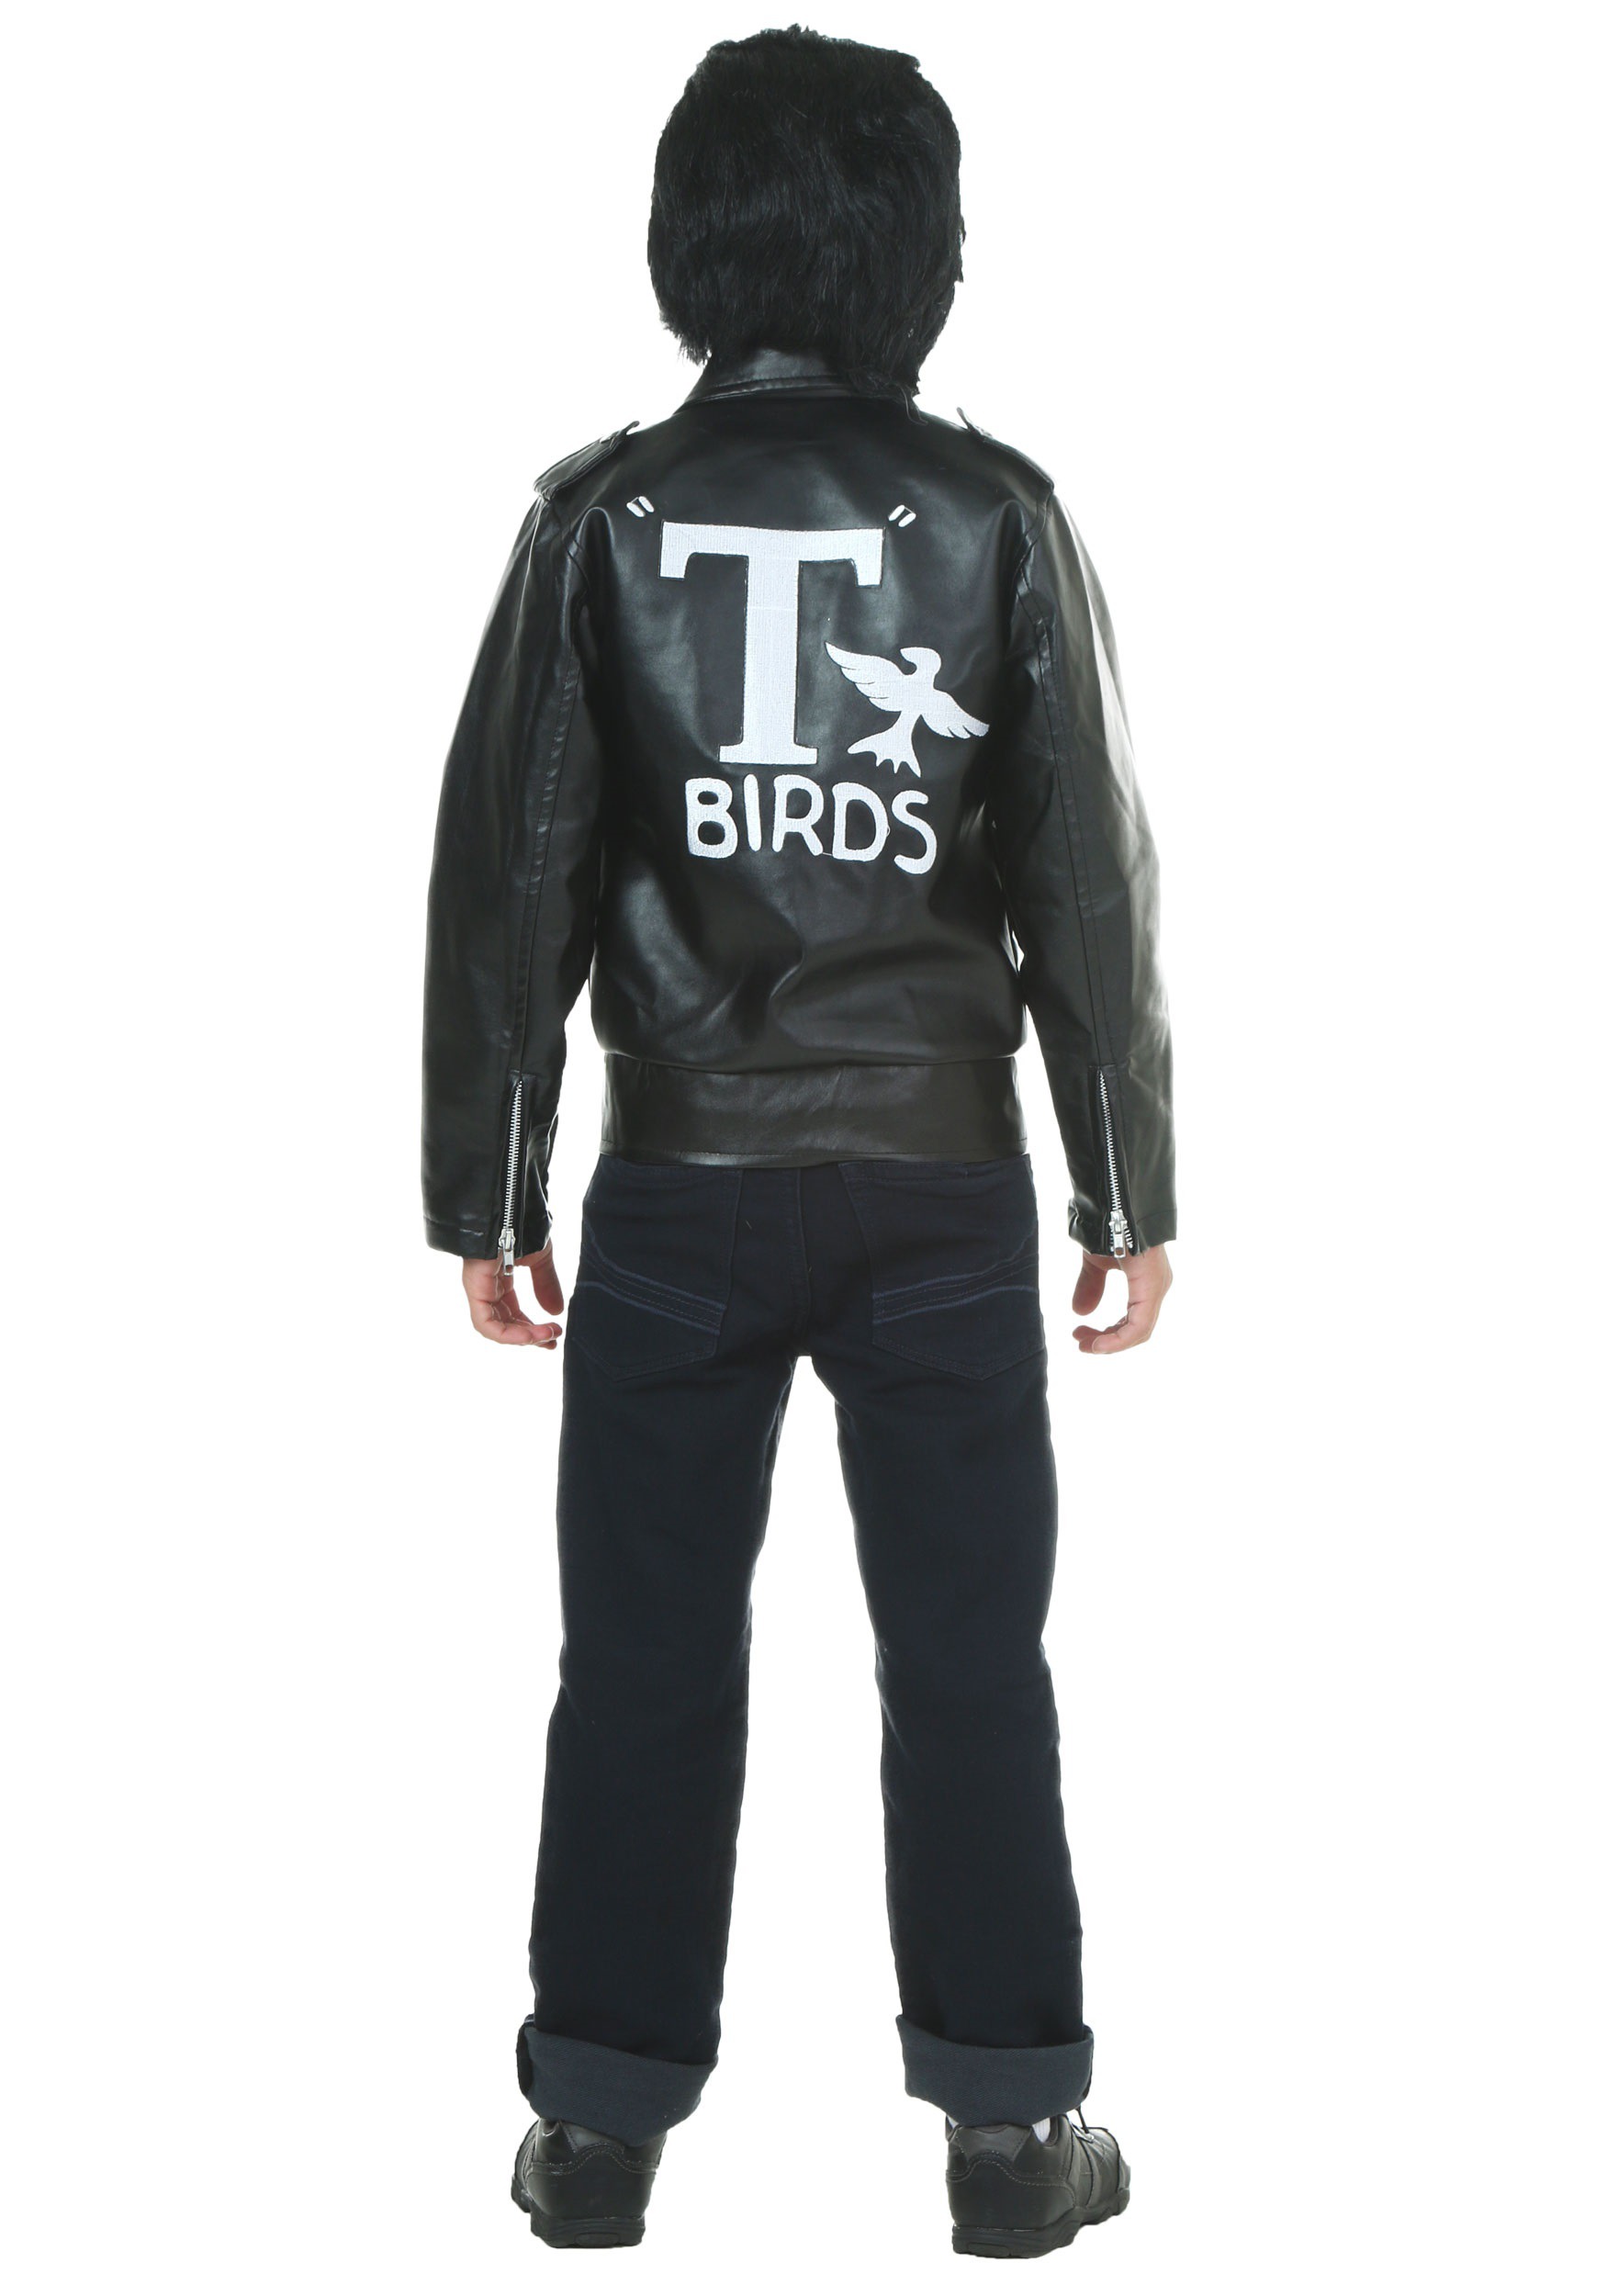 Child Authentic T-Birds Costume Jacket